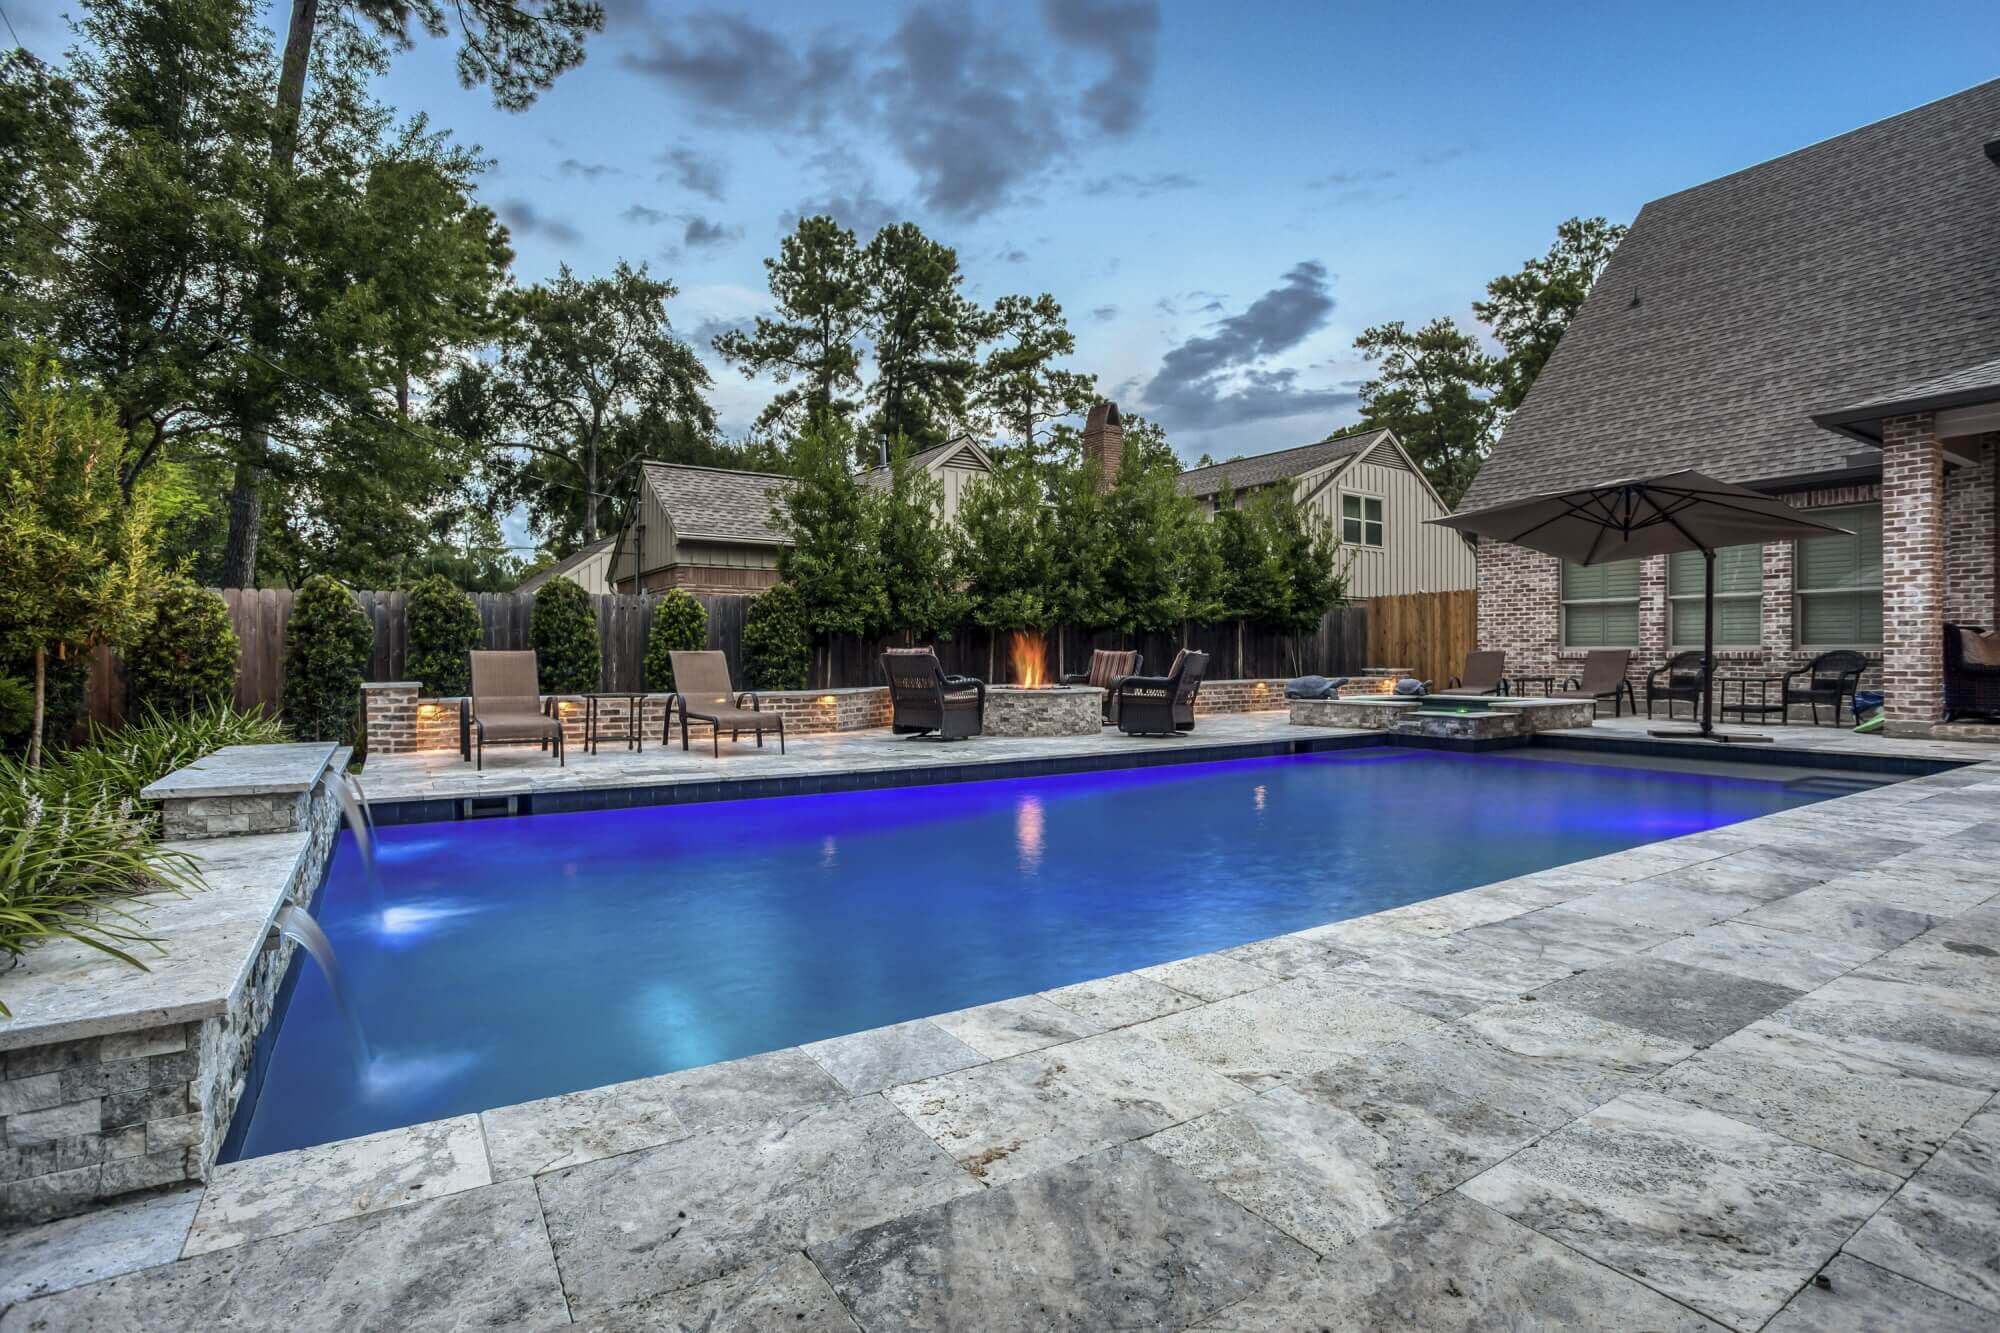 Luxury backyard pool and travertine decking